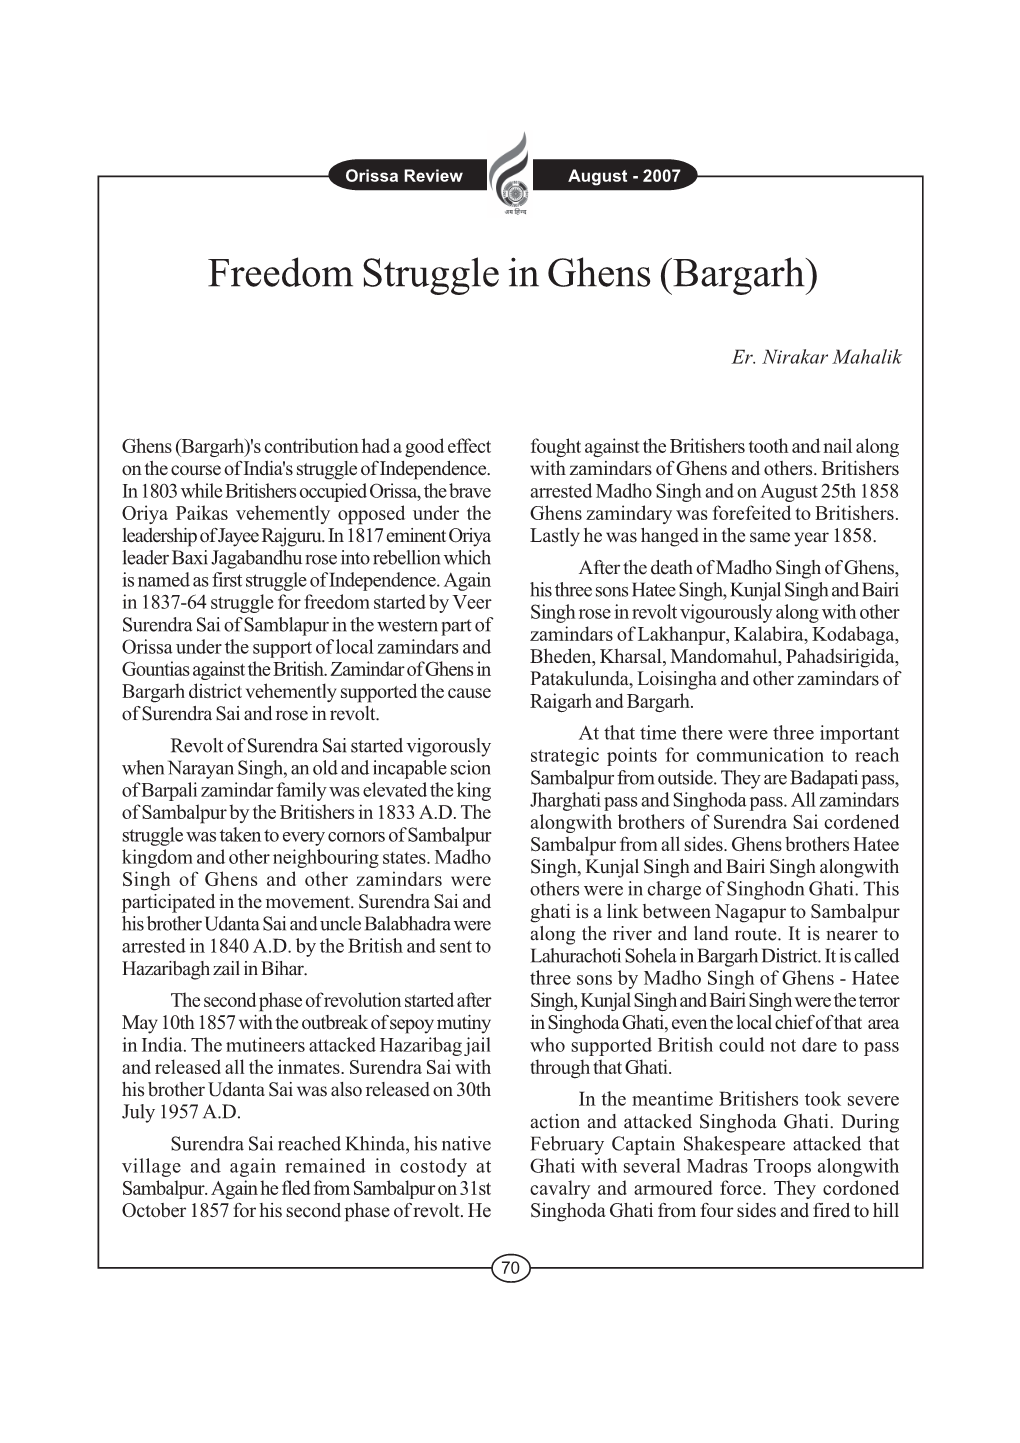 Freedom Struggle in Ghens (Bargarh)